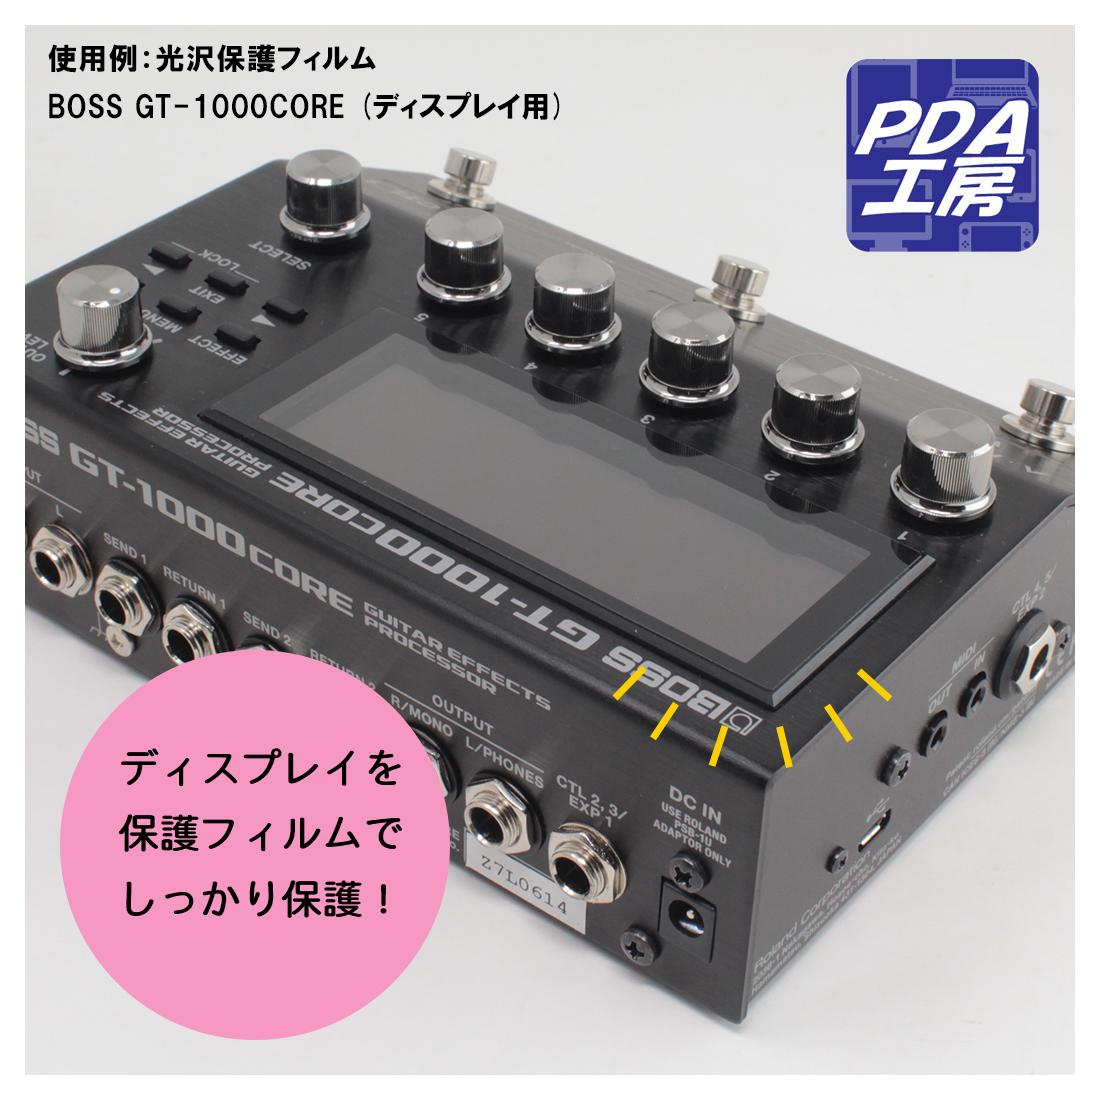 PDA工房 BOSS GT-1000CORE対応 PerfectShield 保護 フィルム [ディスプレイ用] 3枚入 反射低減 防指紋 日本製  自社製造直販 その他